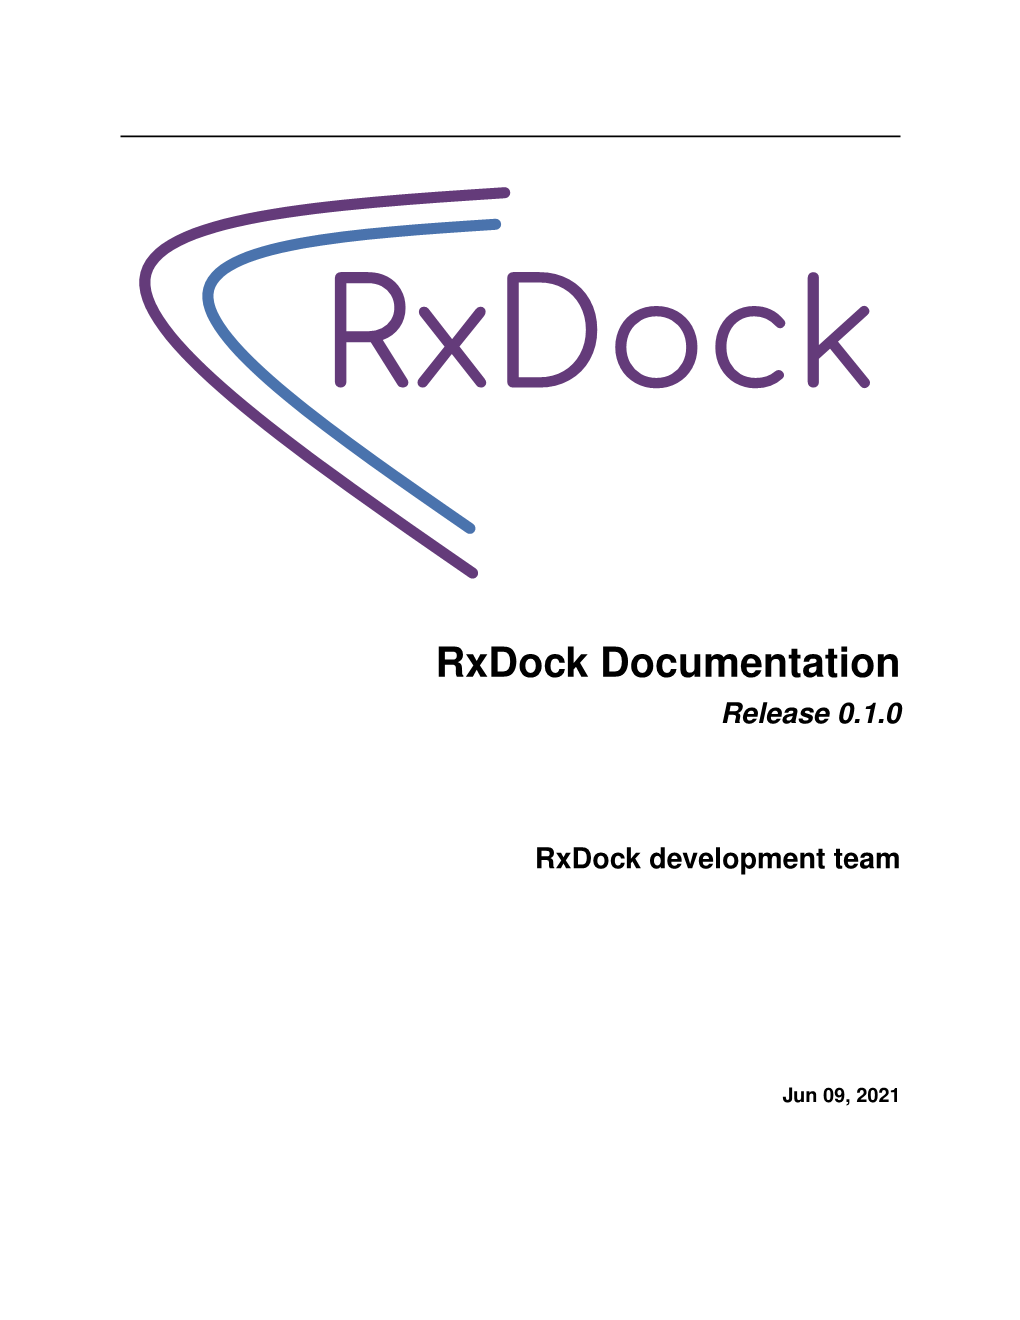 Rxdock Documentation Release 0.1.0